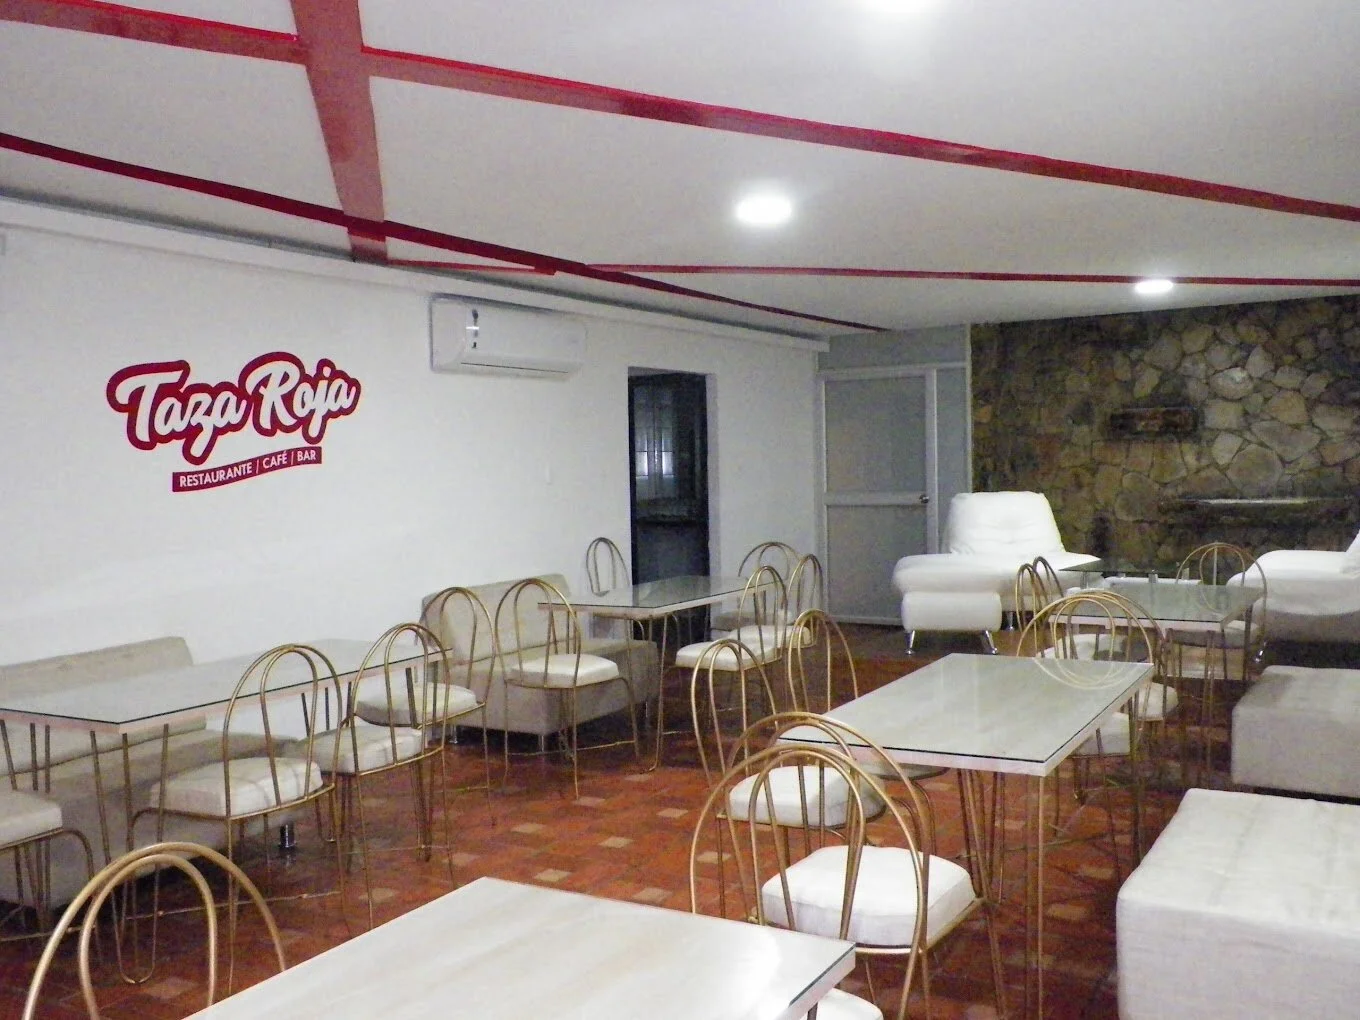 Taza Roja Restaurante Cafe Bar-6345